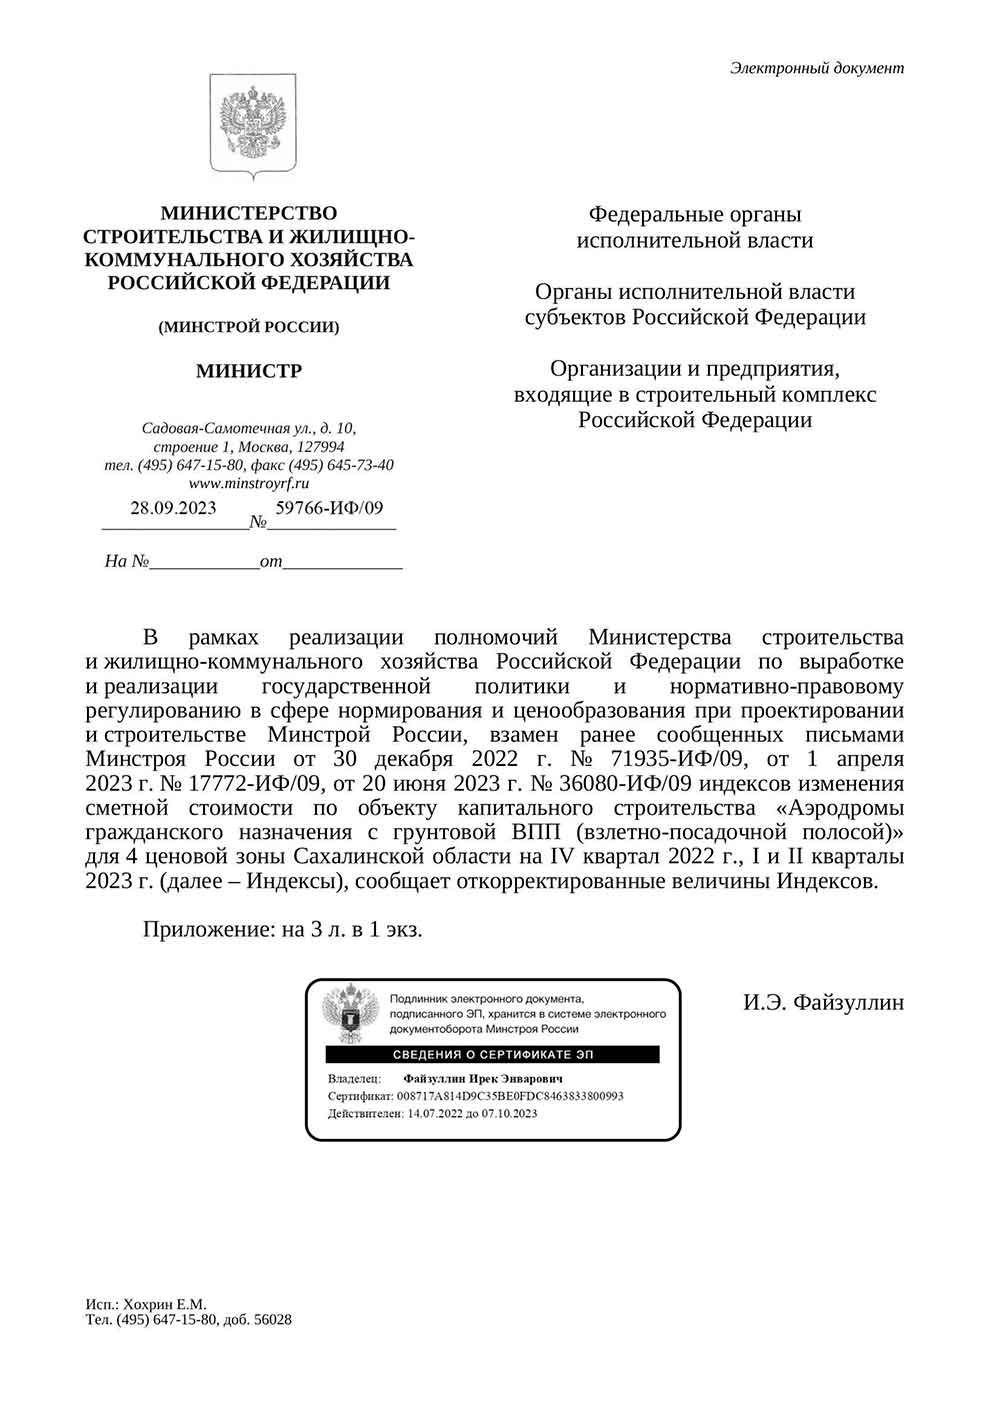 Письмо Минстроя РФ №59766-ИФ/09 от 28.09.2023 г.